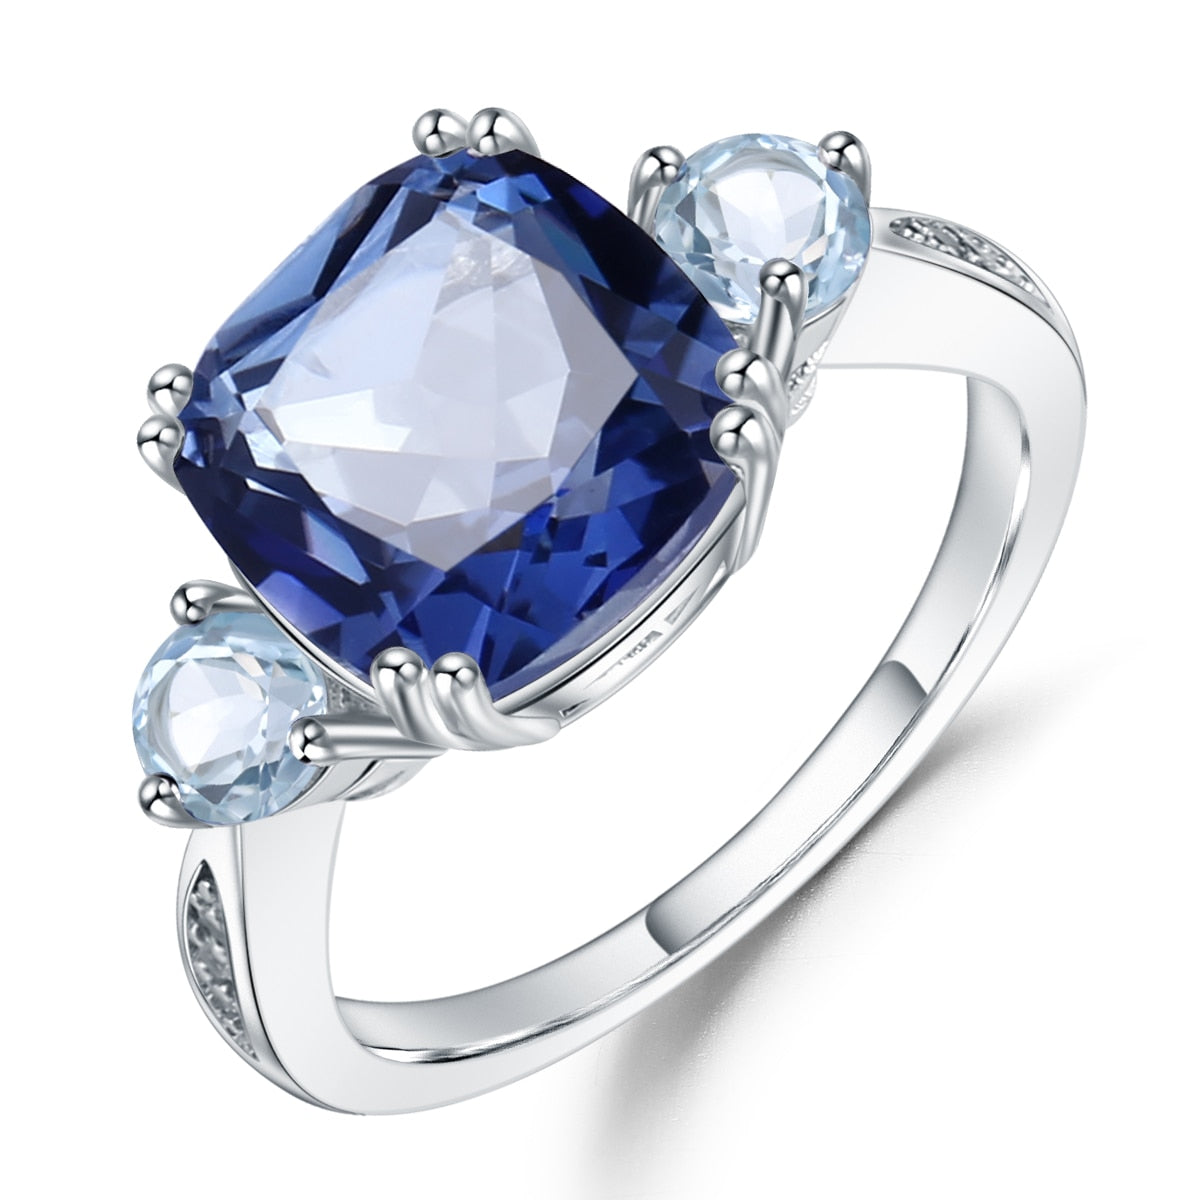 Gem's Ballet 5.22Ct Iolite Blue Mystic Quartz Sky Blue Topaz Rings AU750 585 14K 10K 18K Gold 925 Silver Ring Jewelry For Women 925 Sterling Silver C195RMIX1